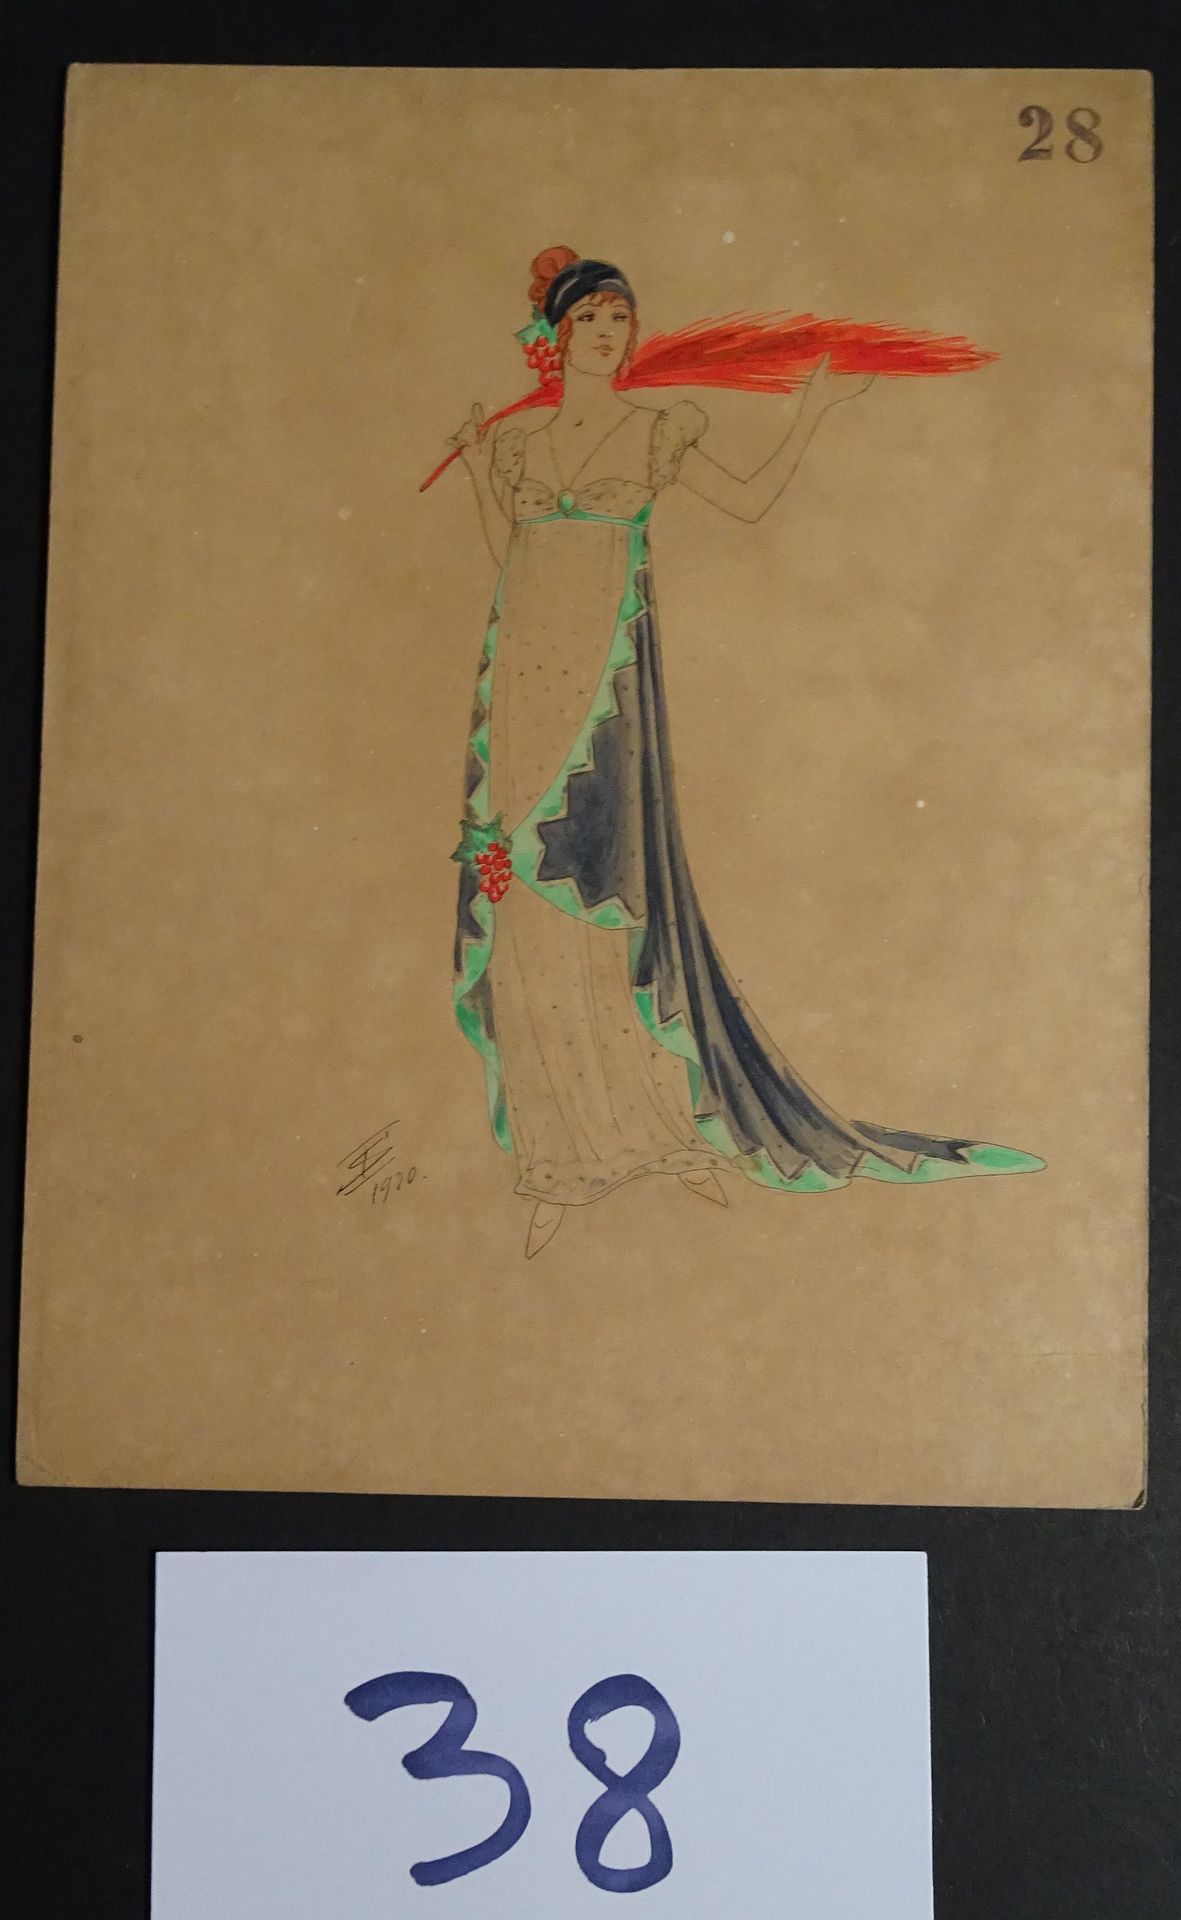 SOKOLOFF SOKOLOFF IGOR (principios del siglo XX) 

"Mujer con abanico rojo". Plu&hellip;